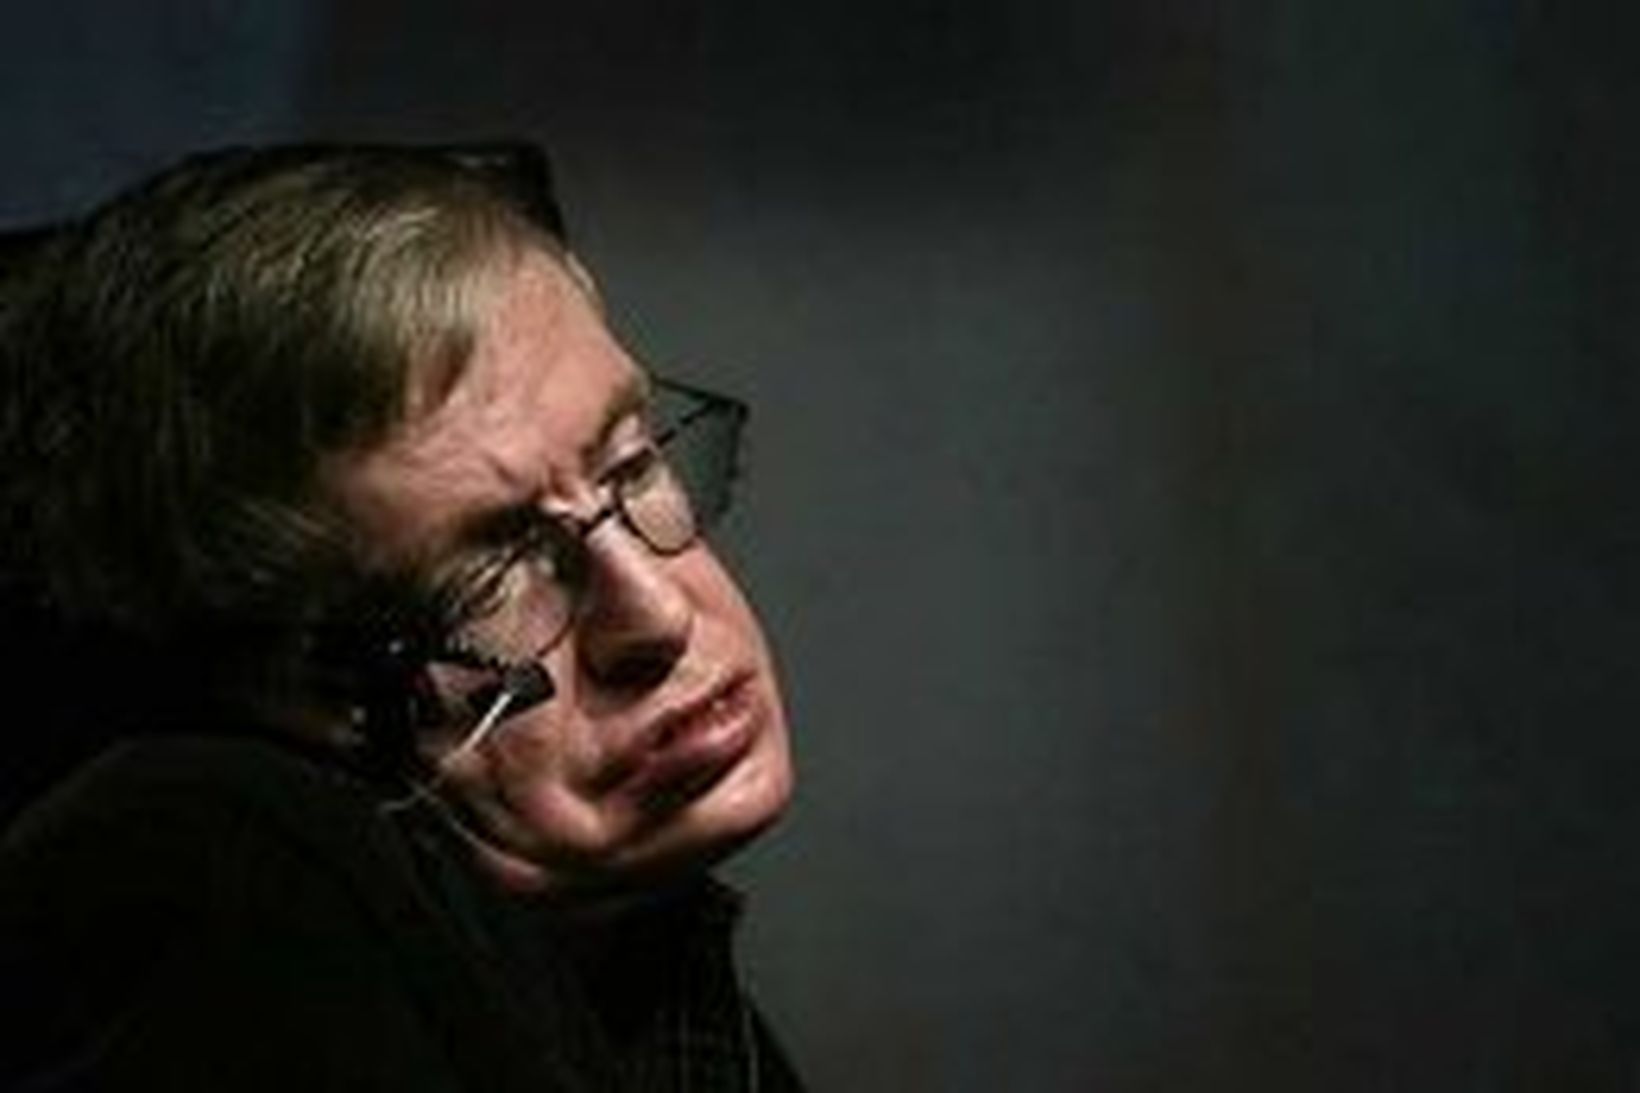 Stephen Hawking.